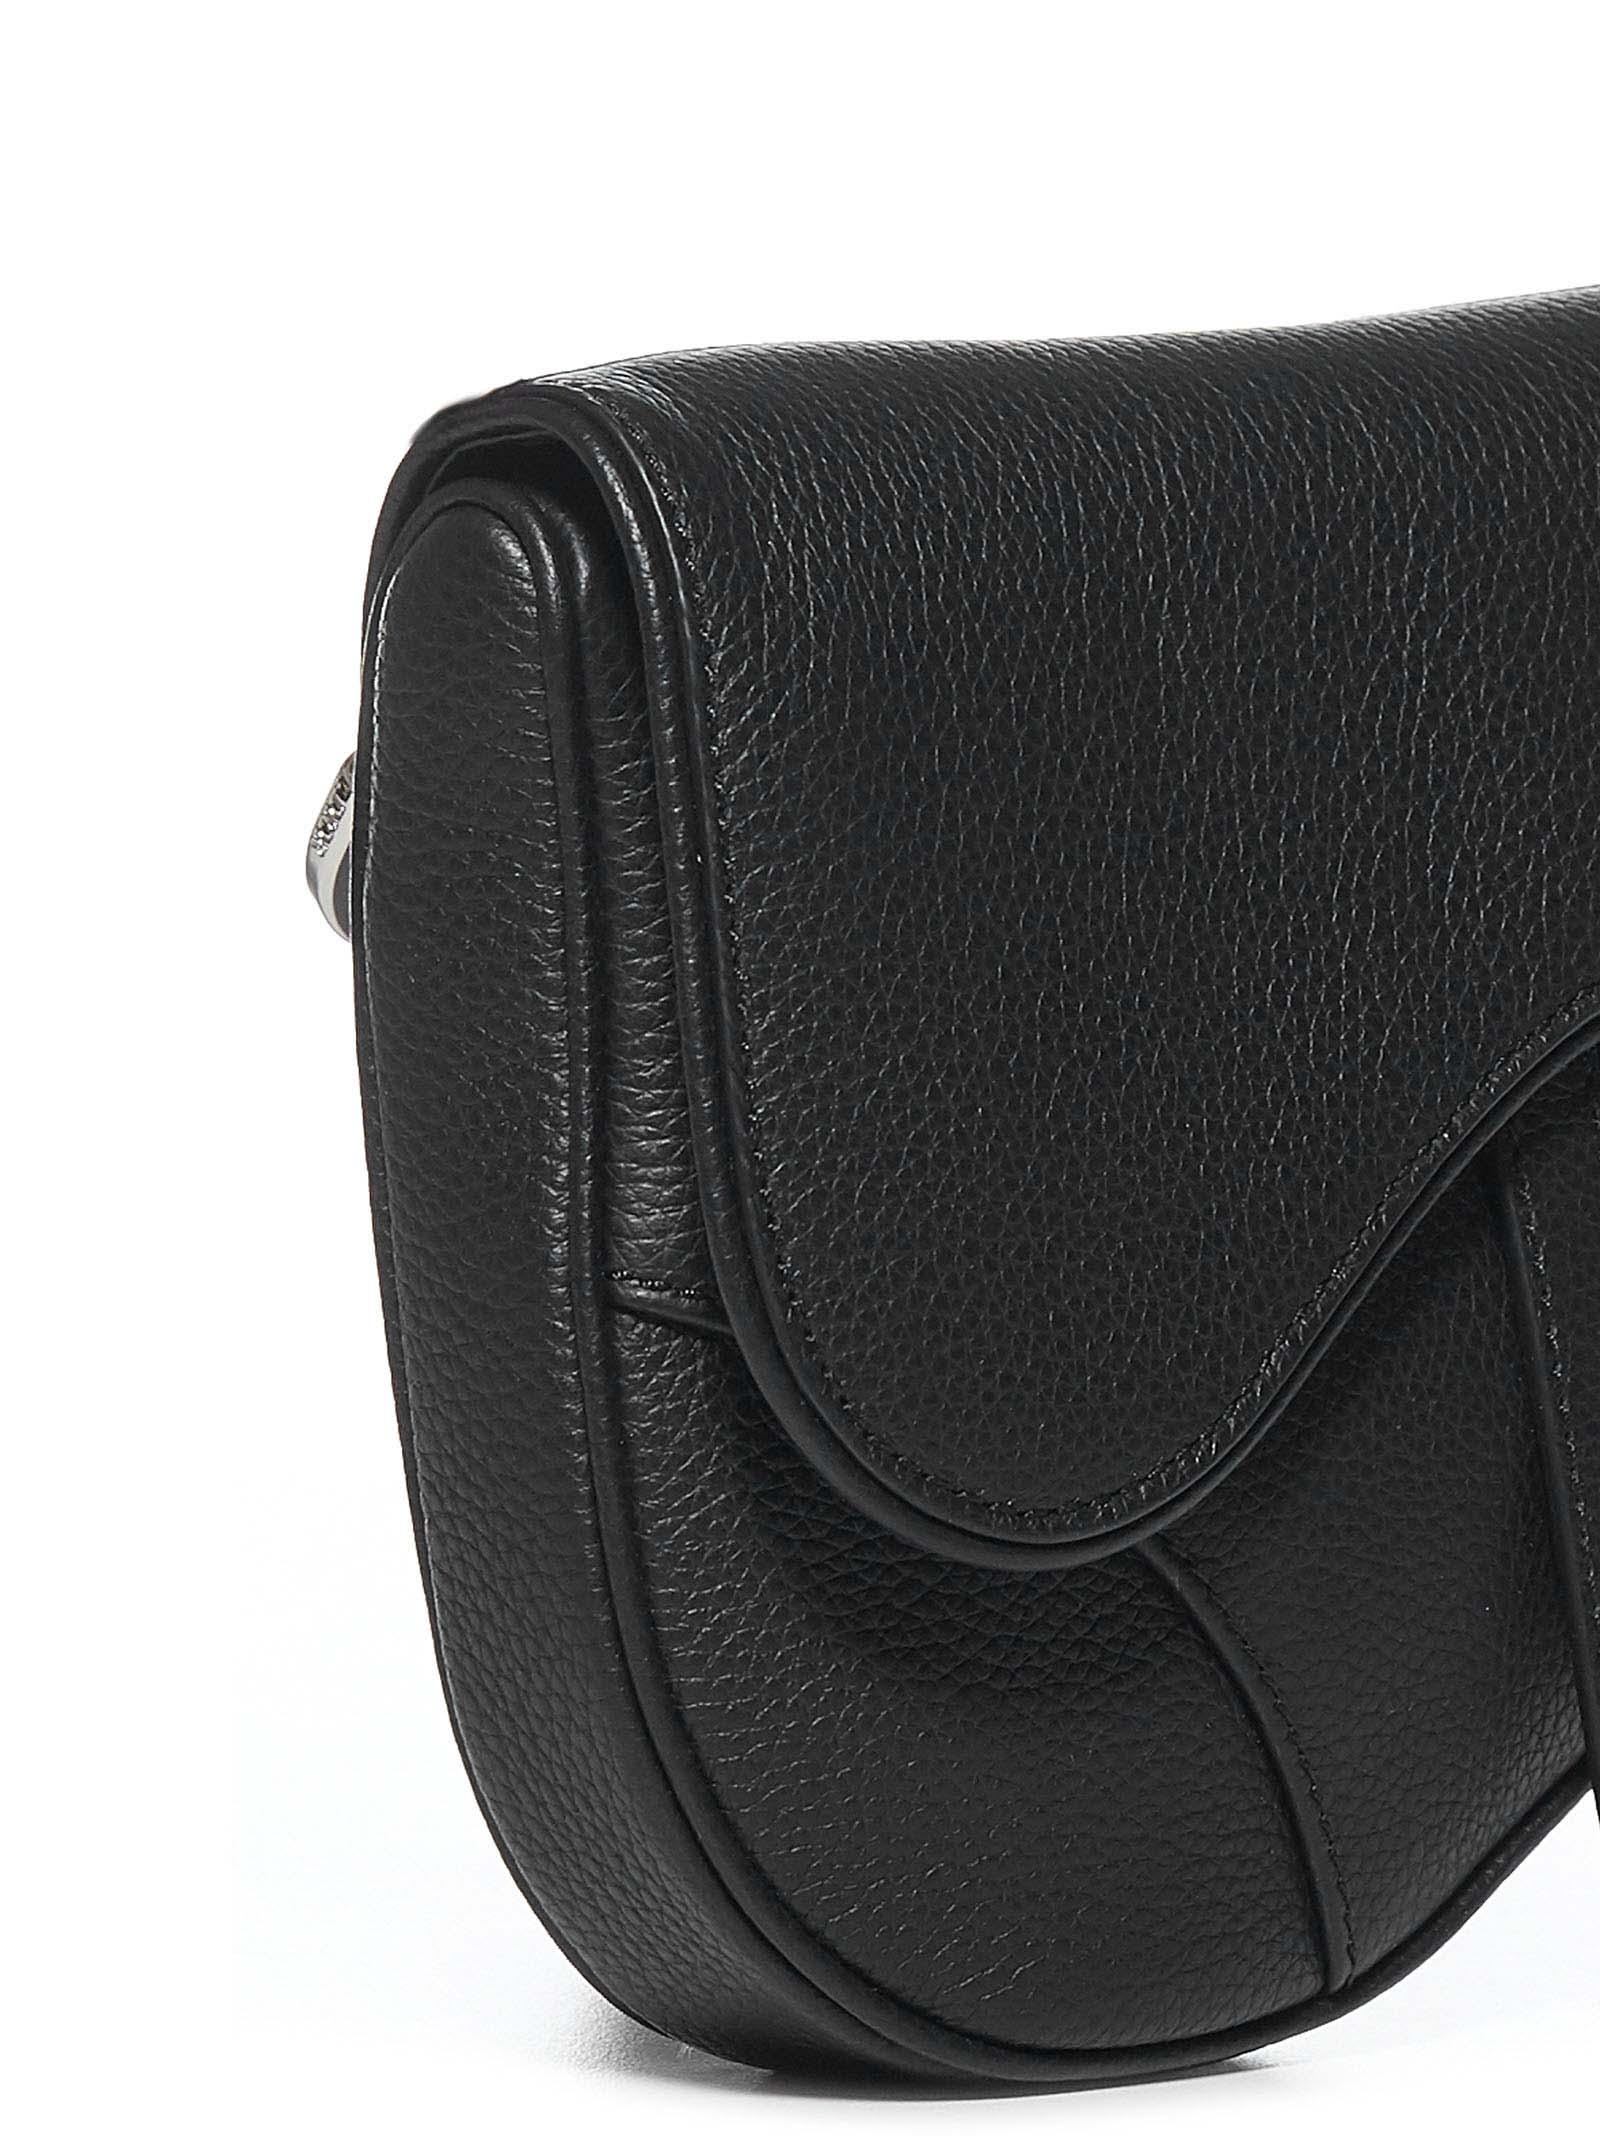 Dior Mini Saddle Bag - Black